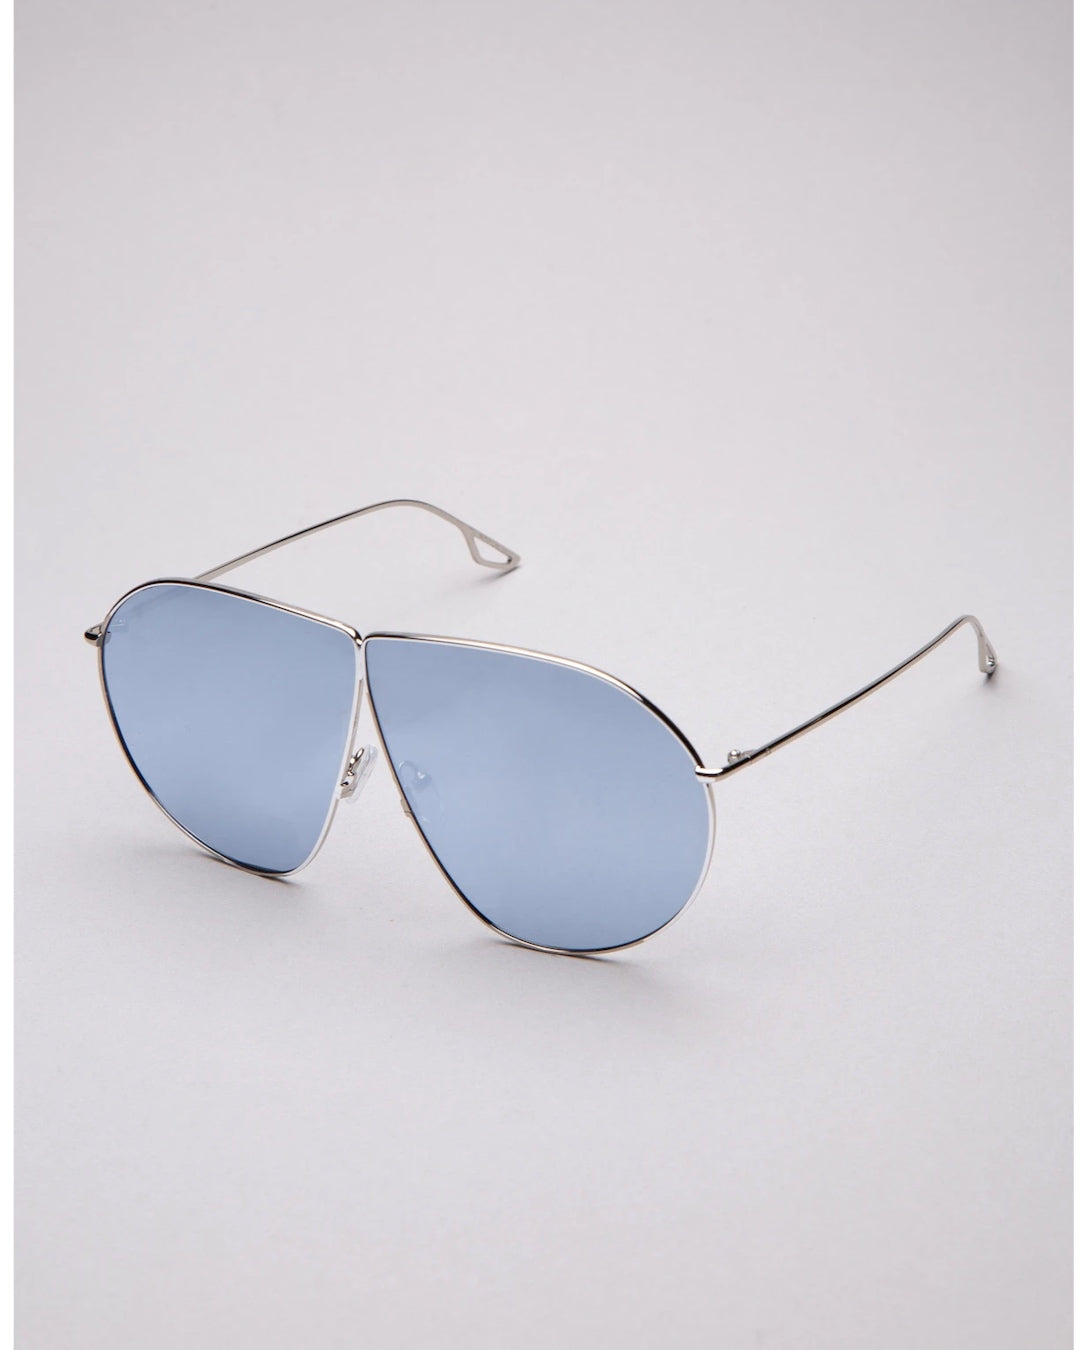 3NY - KRIS -SILVER Sunglasses